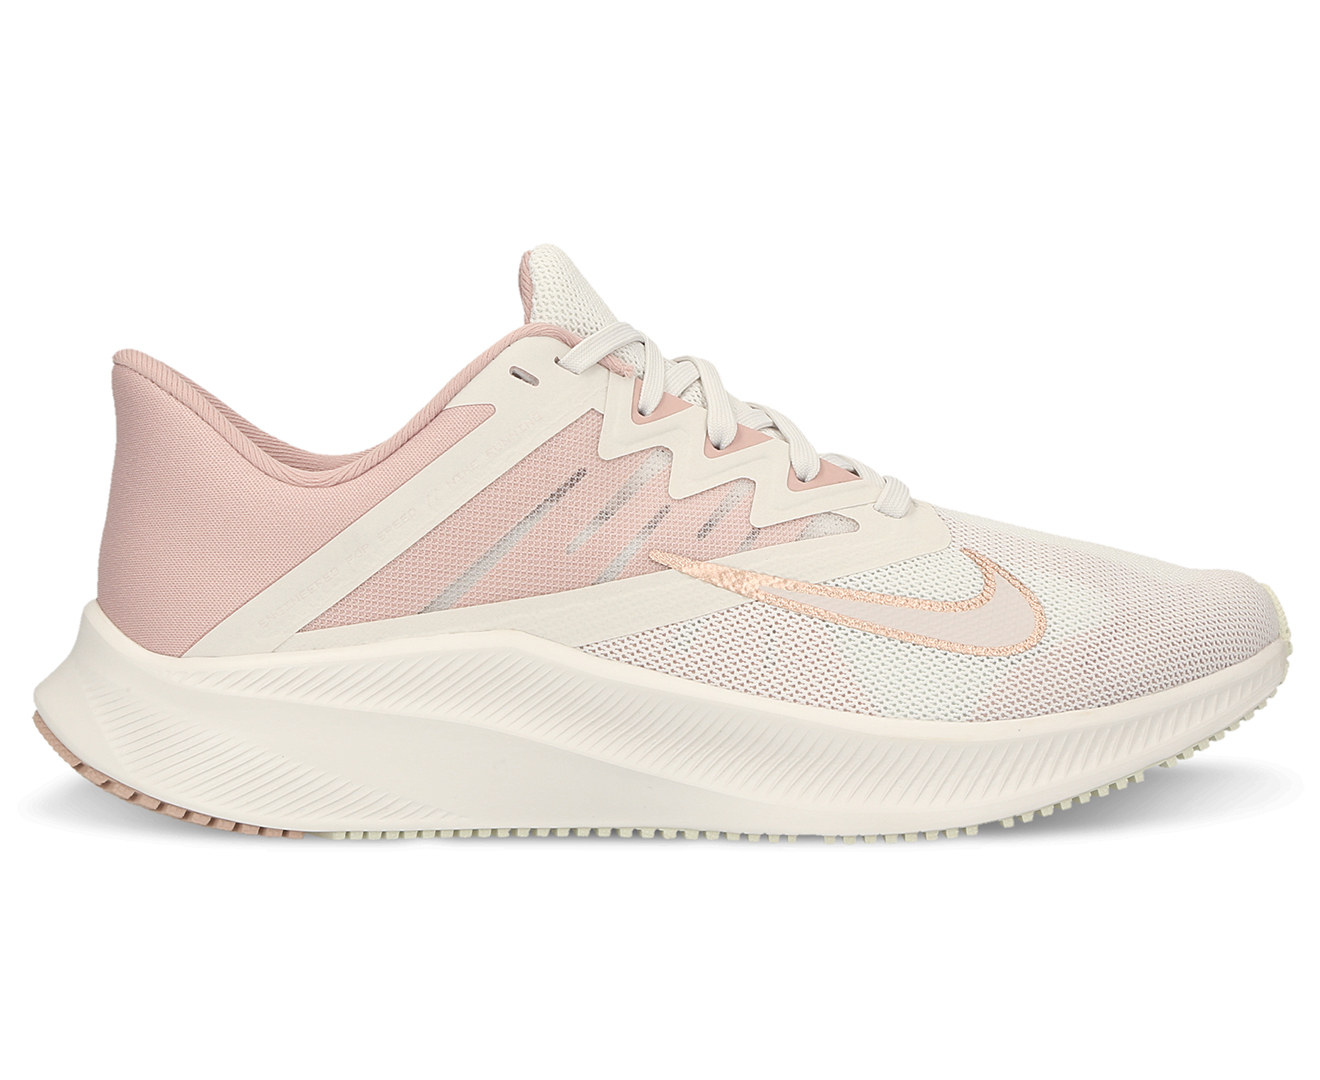 Nike Women's Quest 3 Running Shoes - Platinum Tint/Rose Gold | Catch.com.au